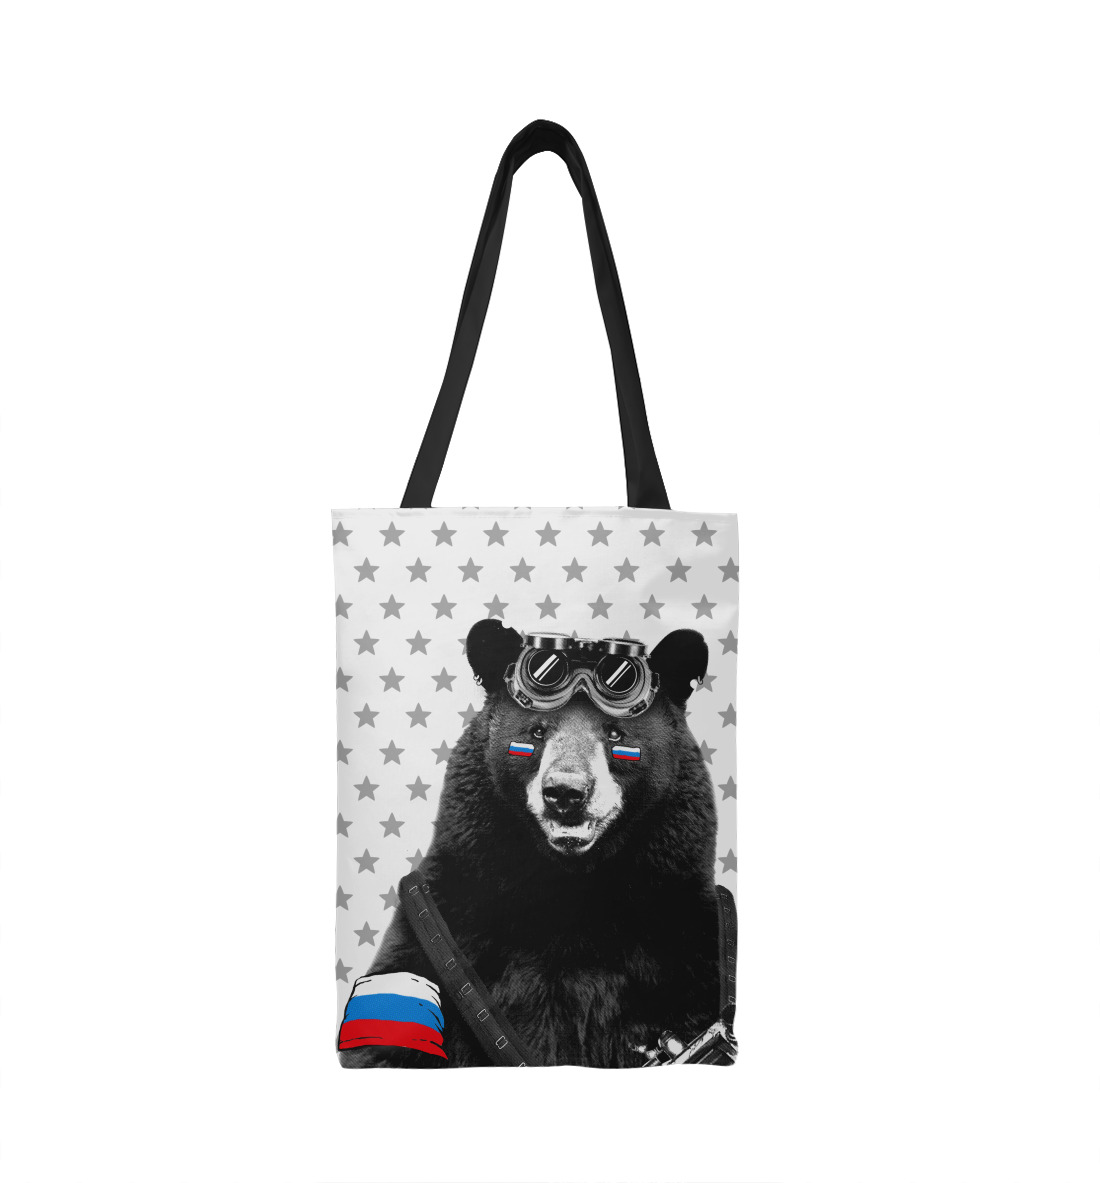 Купить Сумка-шоппер Армейский медведь, артикул VZL-987767-susmp